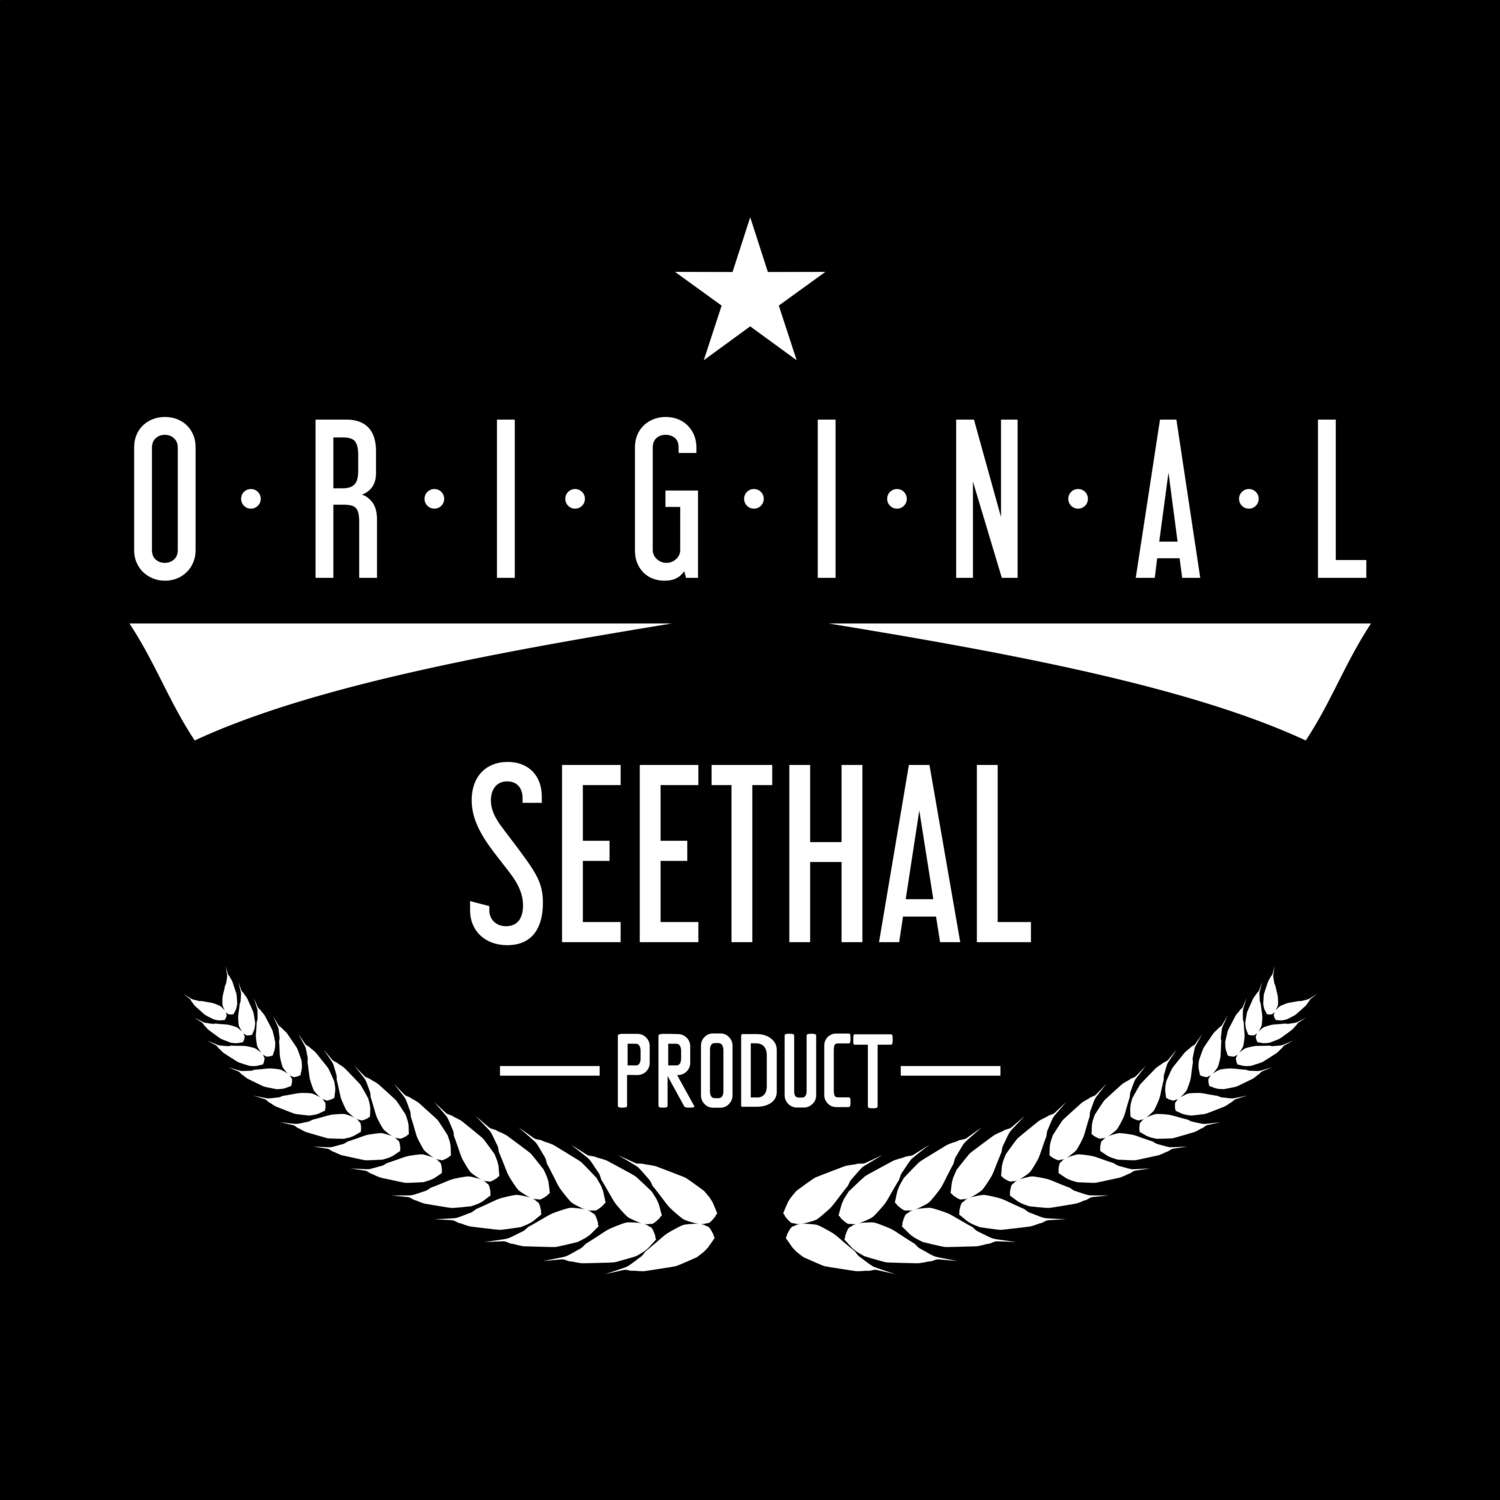 Seethal T-Shirt »Original Product«